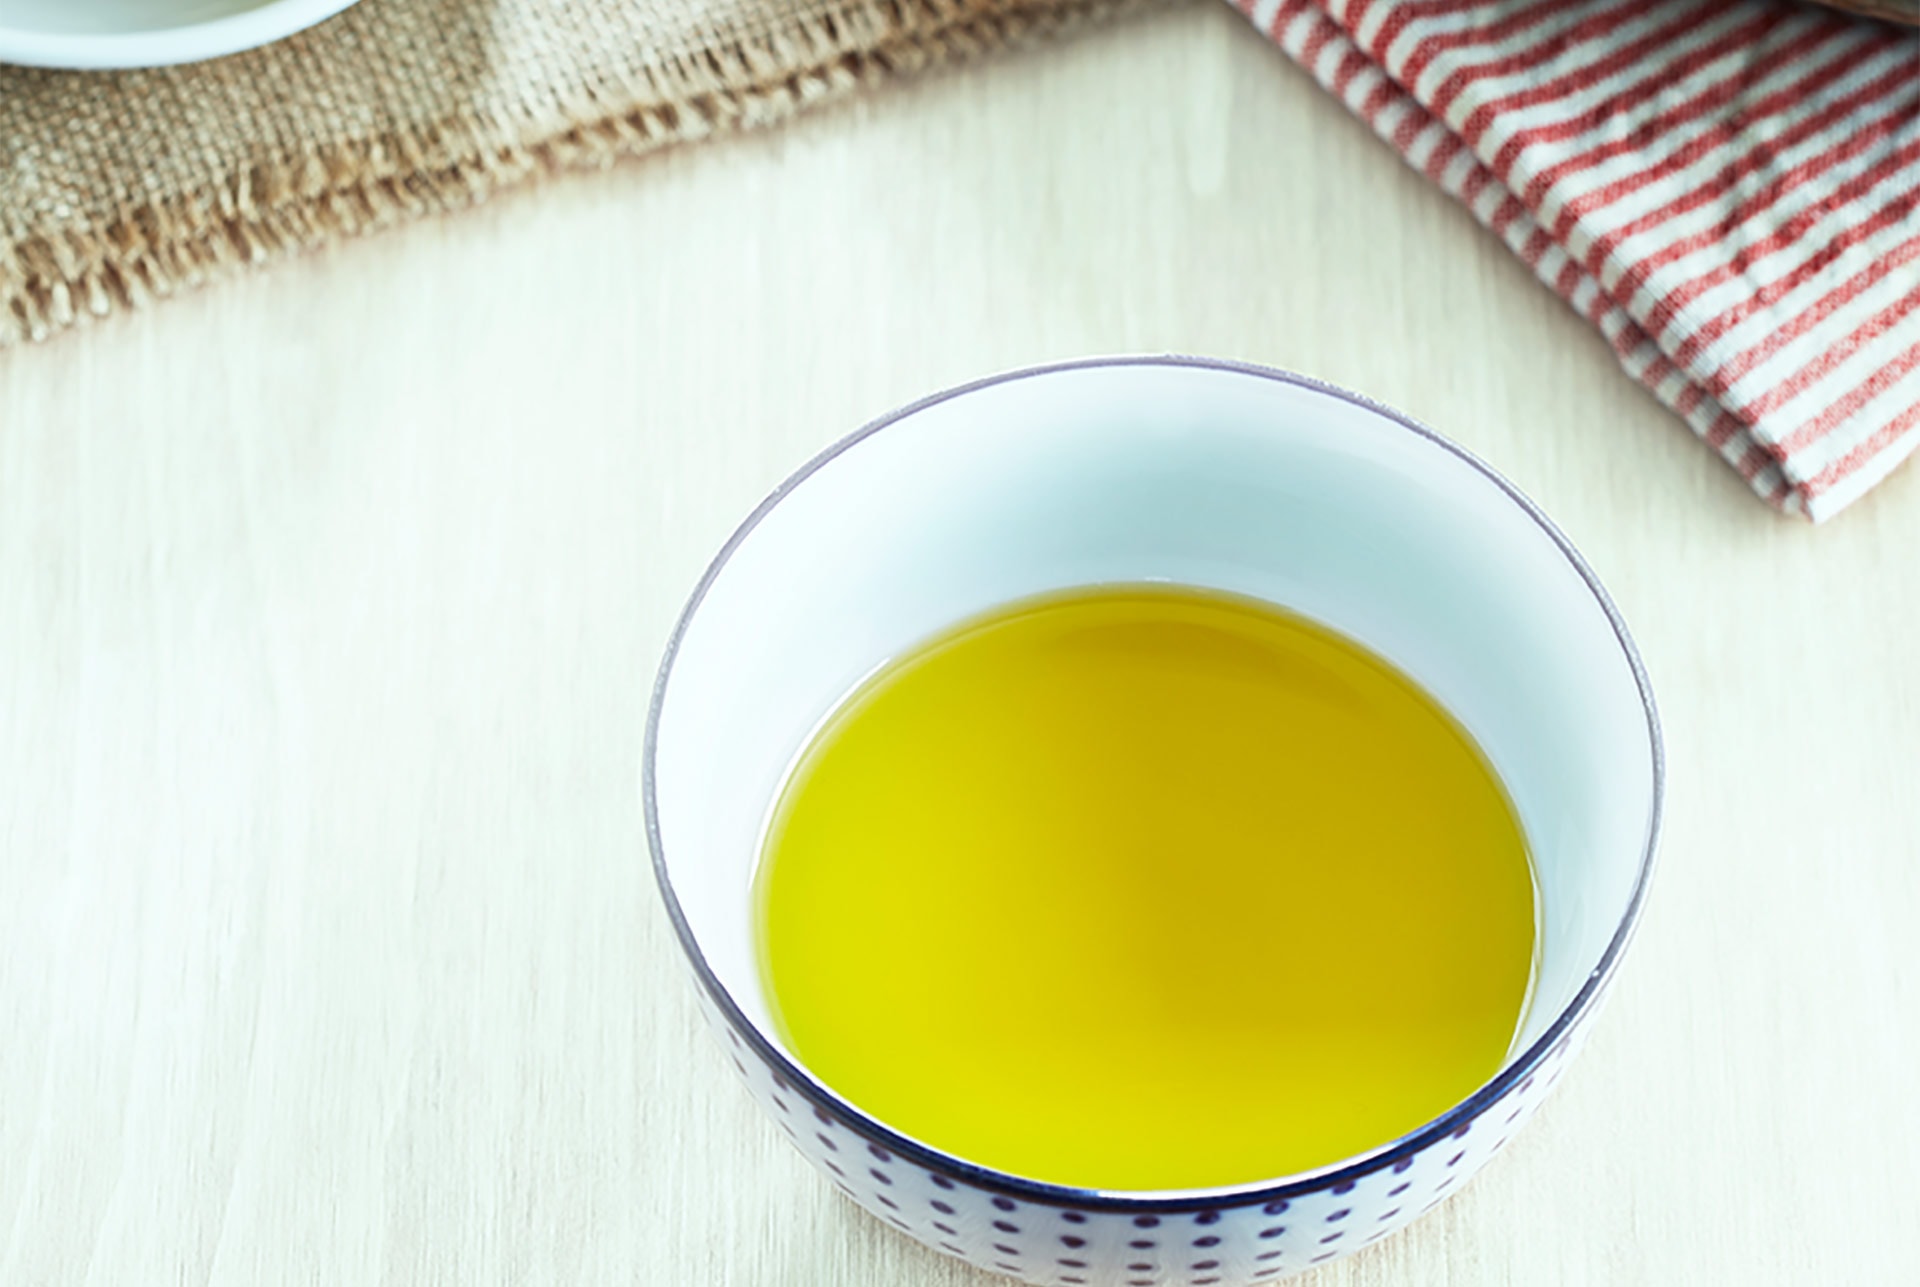 Extra-virgin olive oil tasting